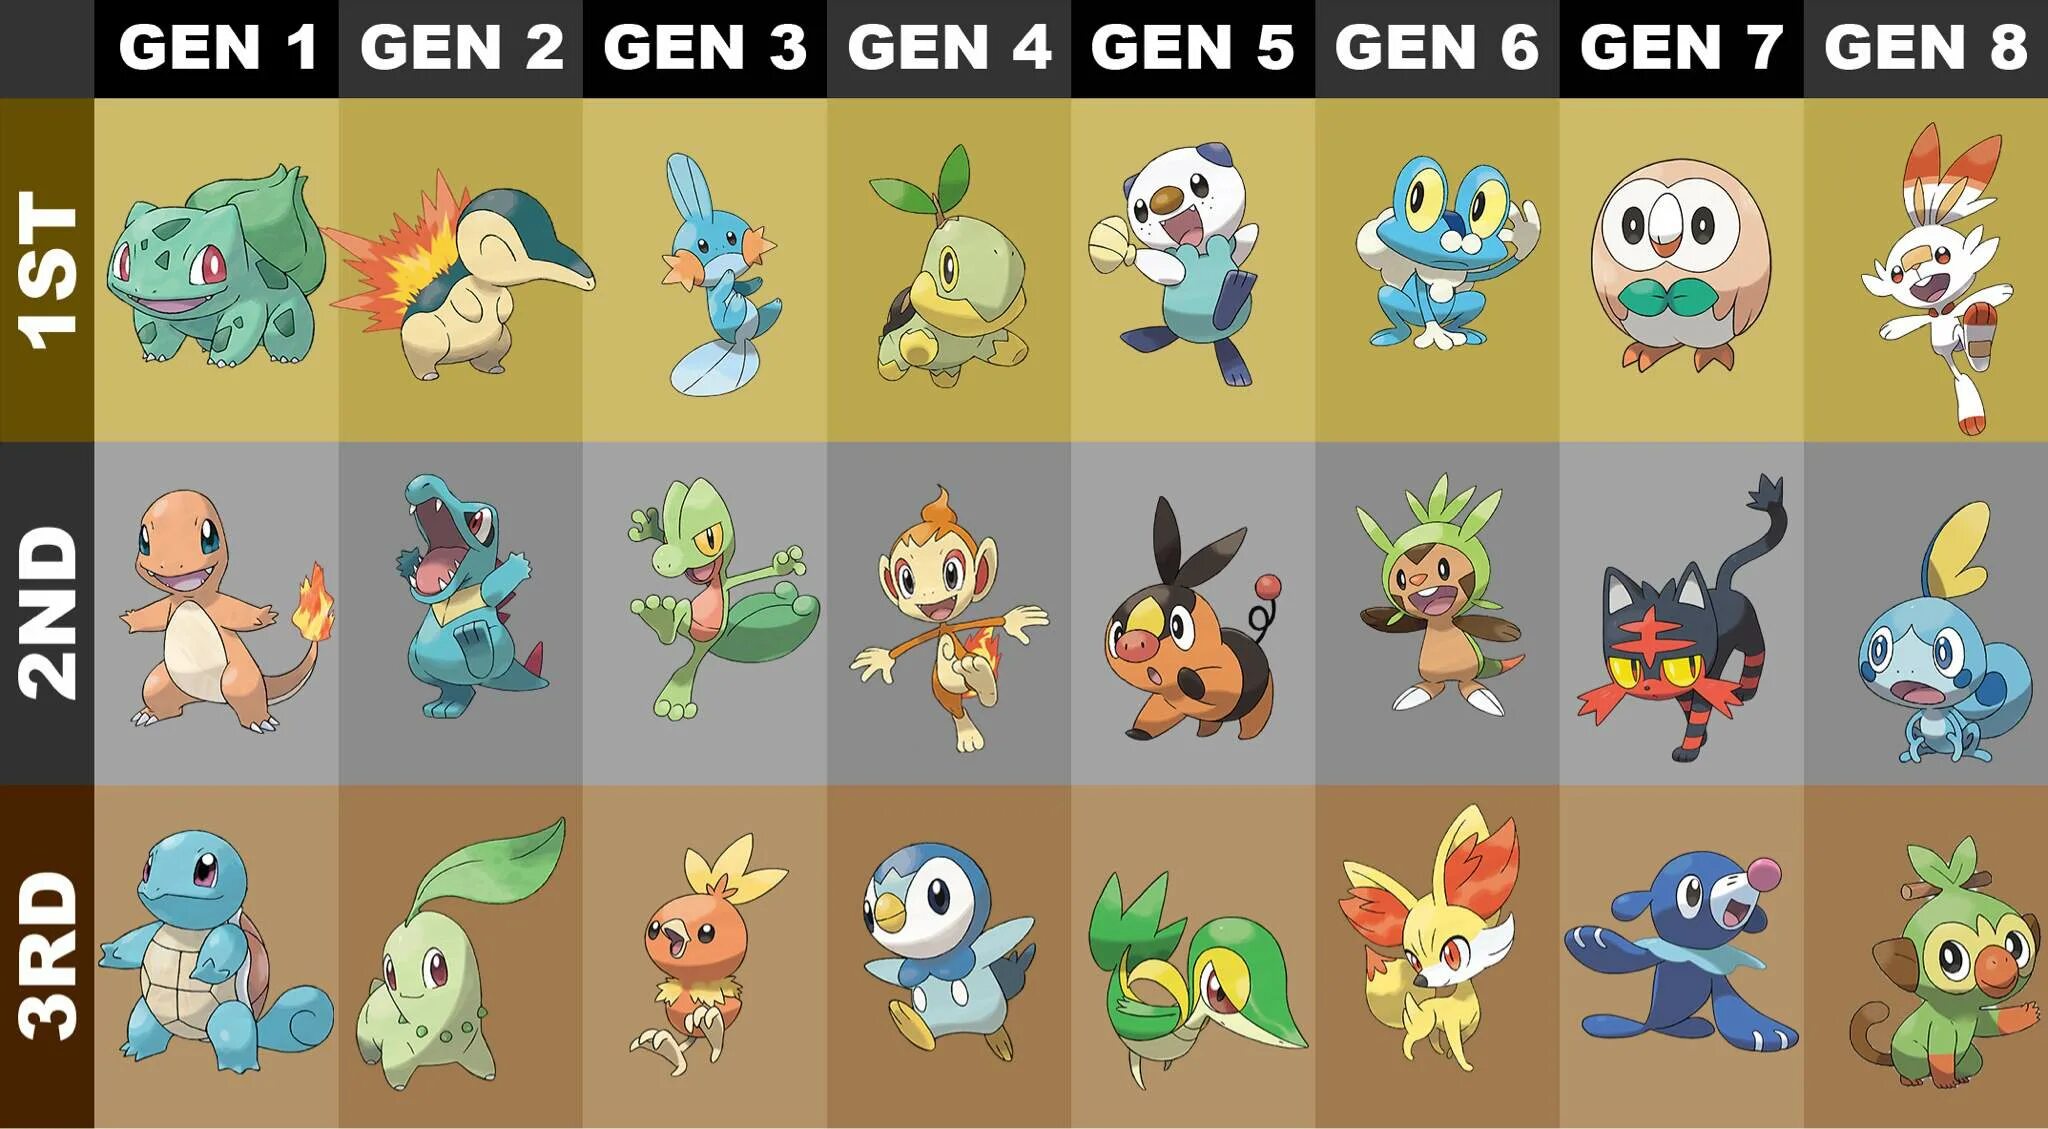 Покемоны 1 5. Pokemon Gen 8 Starters. Покемоны 1. Покемоны 1 поколения. Pokemon-Gen-1-Starters.